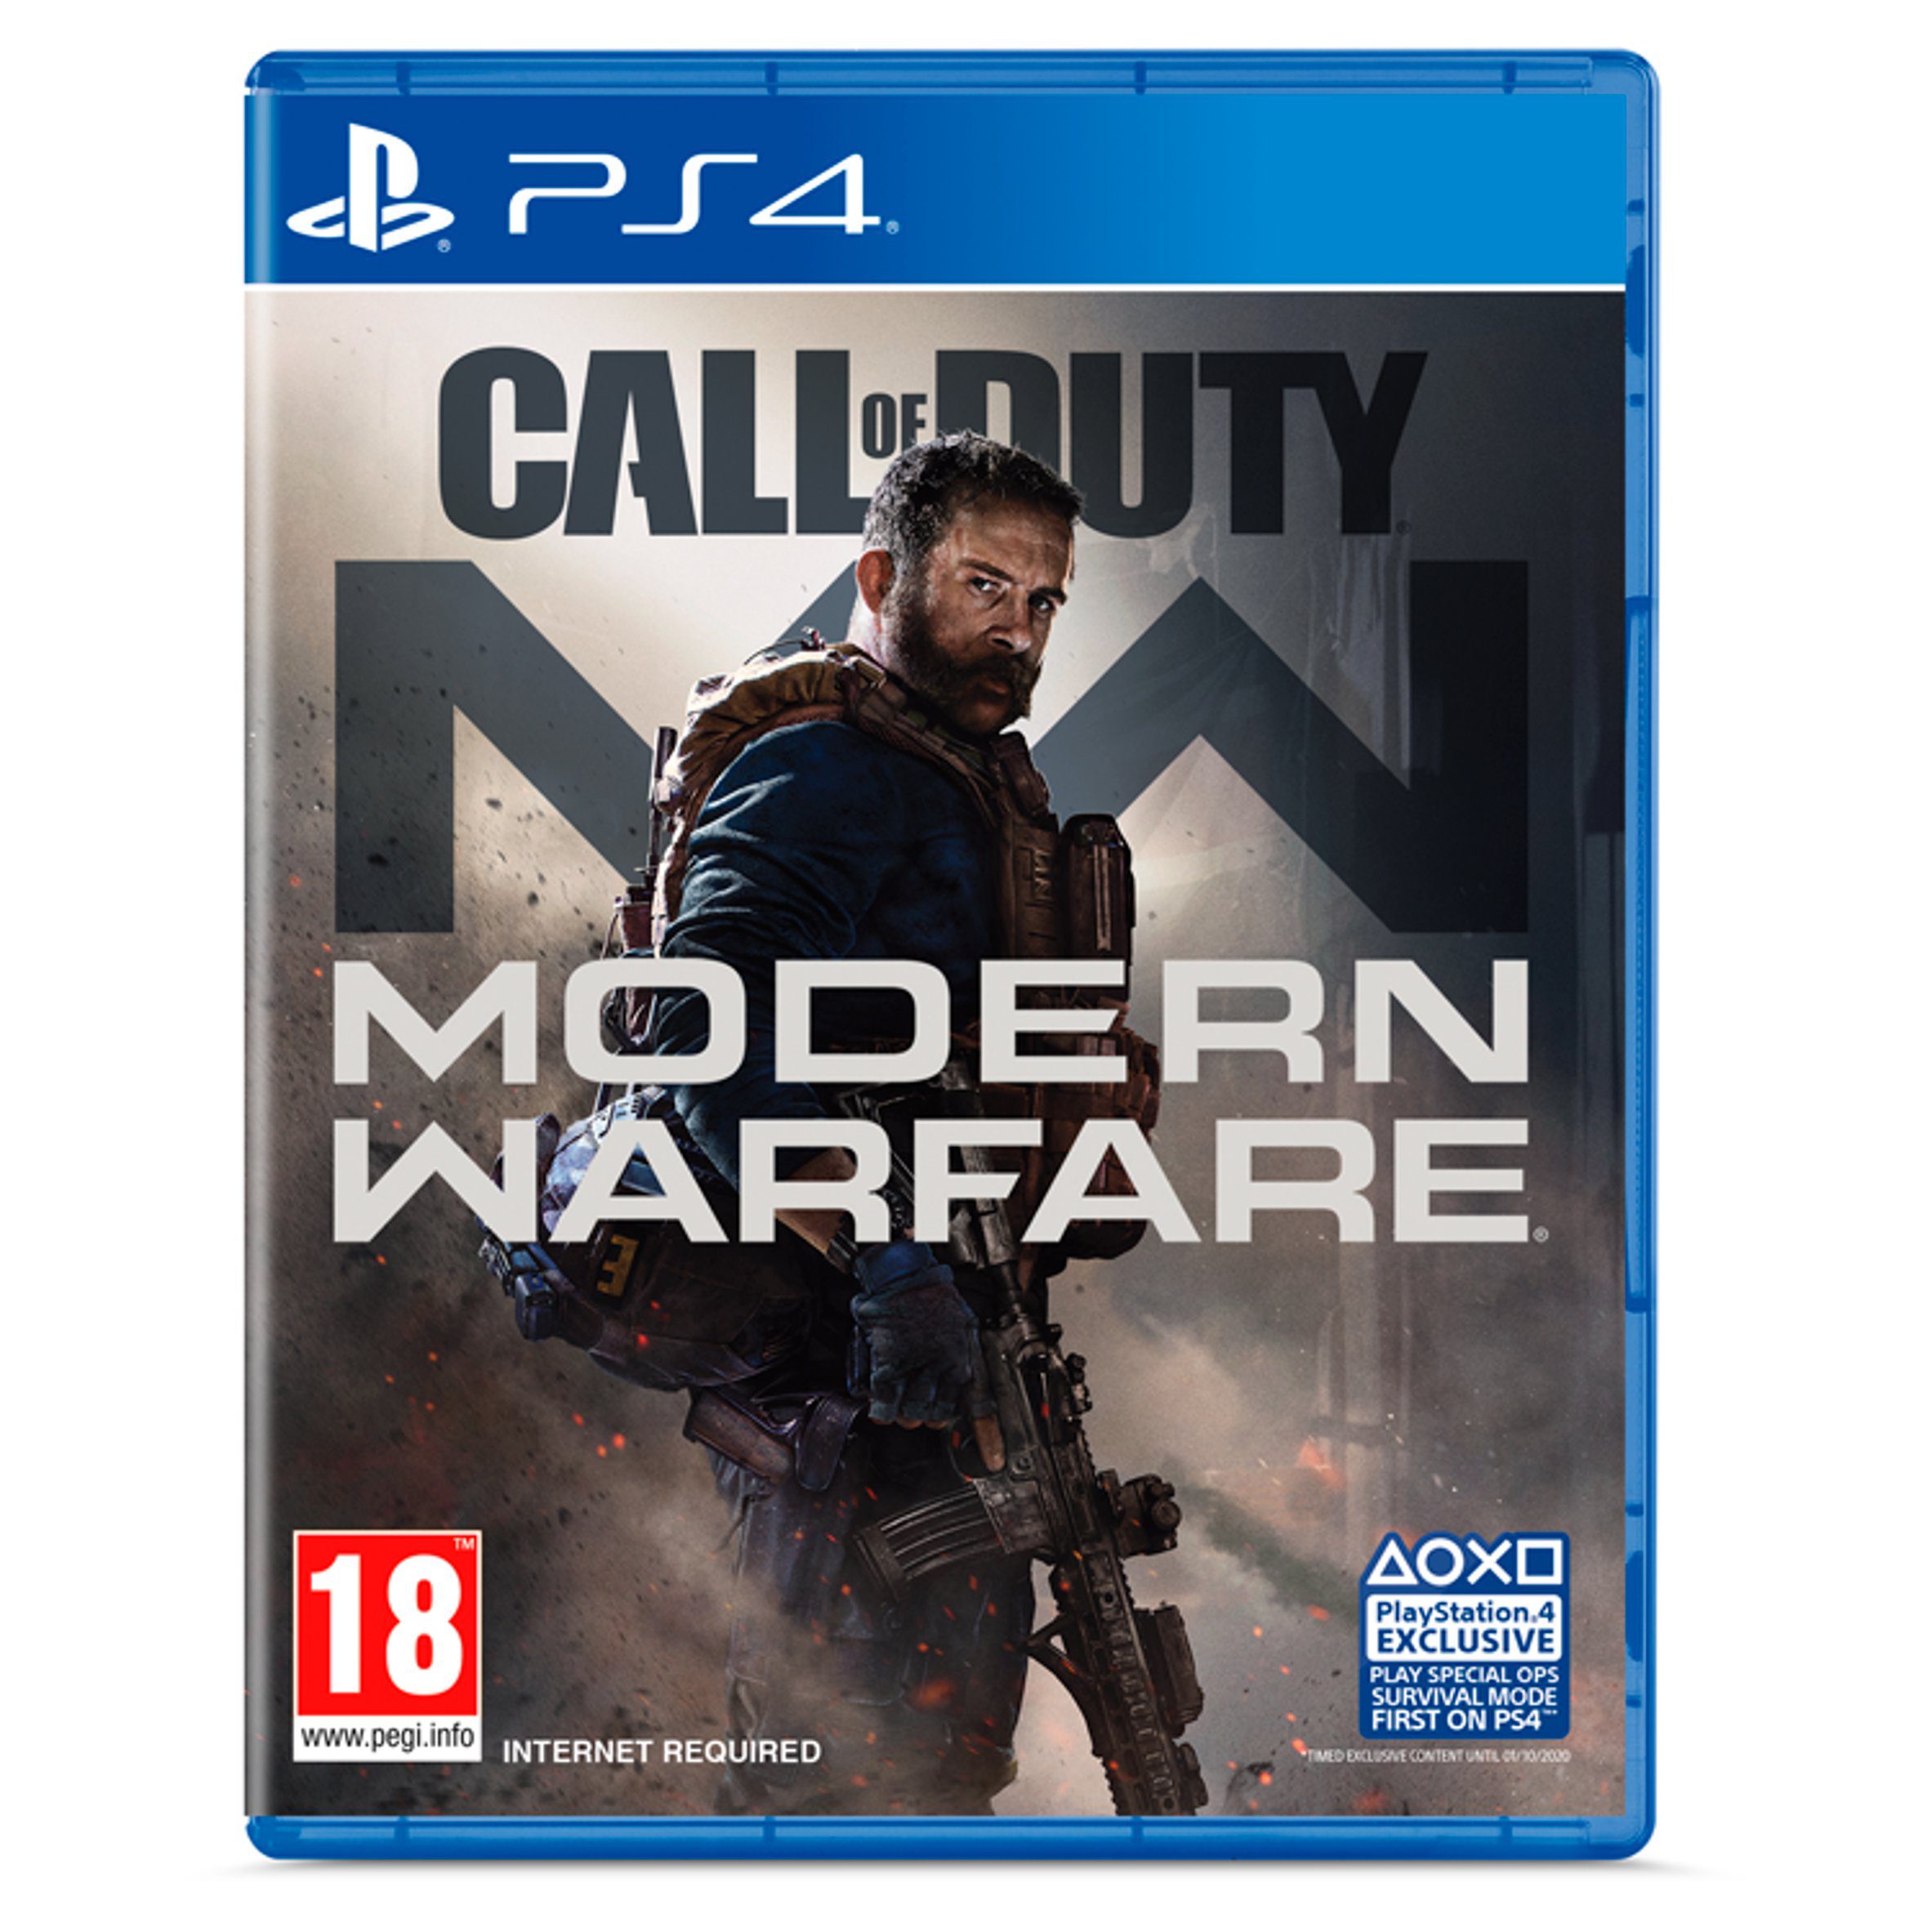 Call of Duty: Modern Warfare PS4 (New)